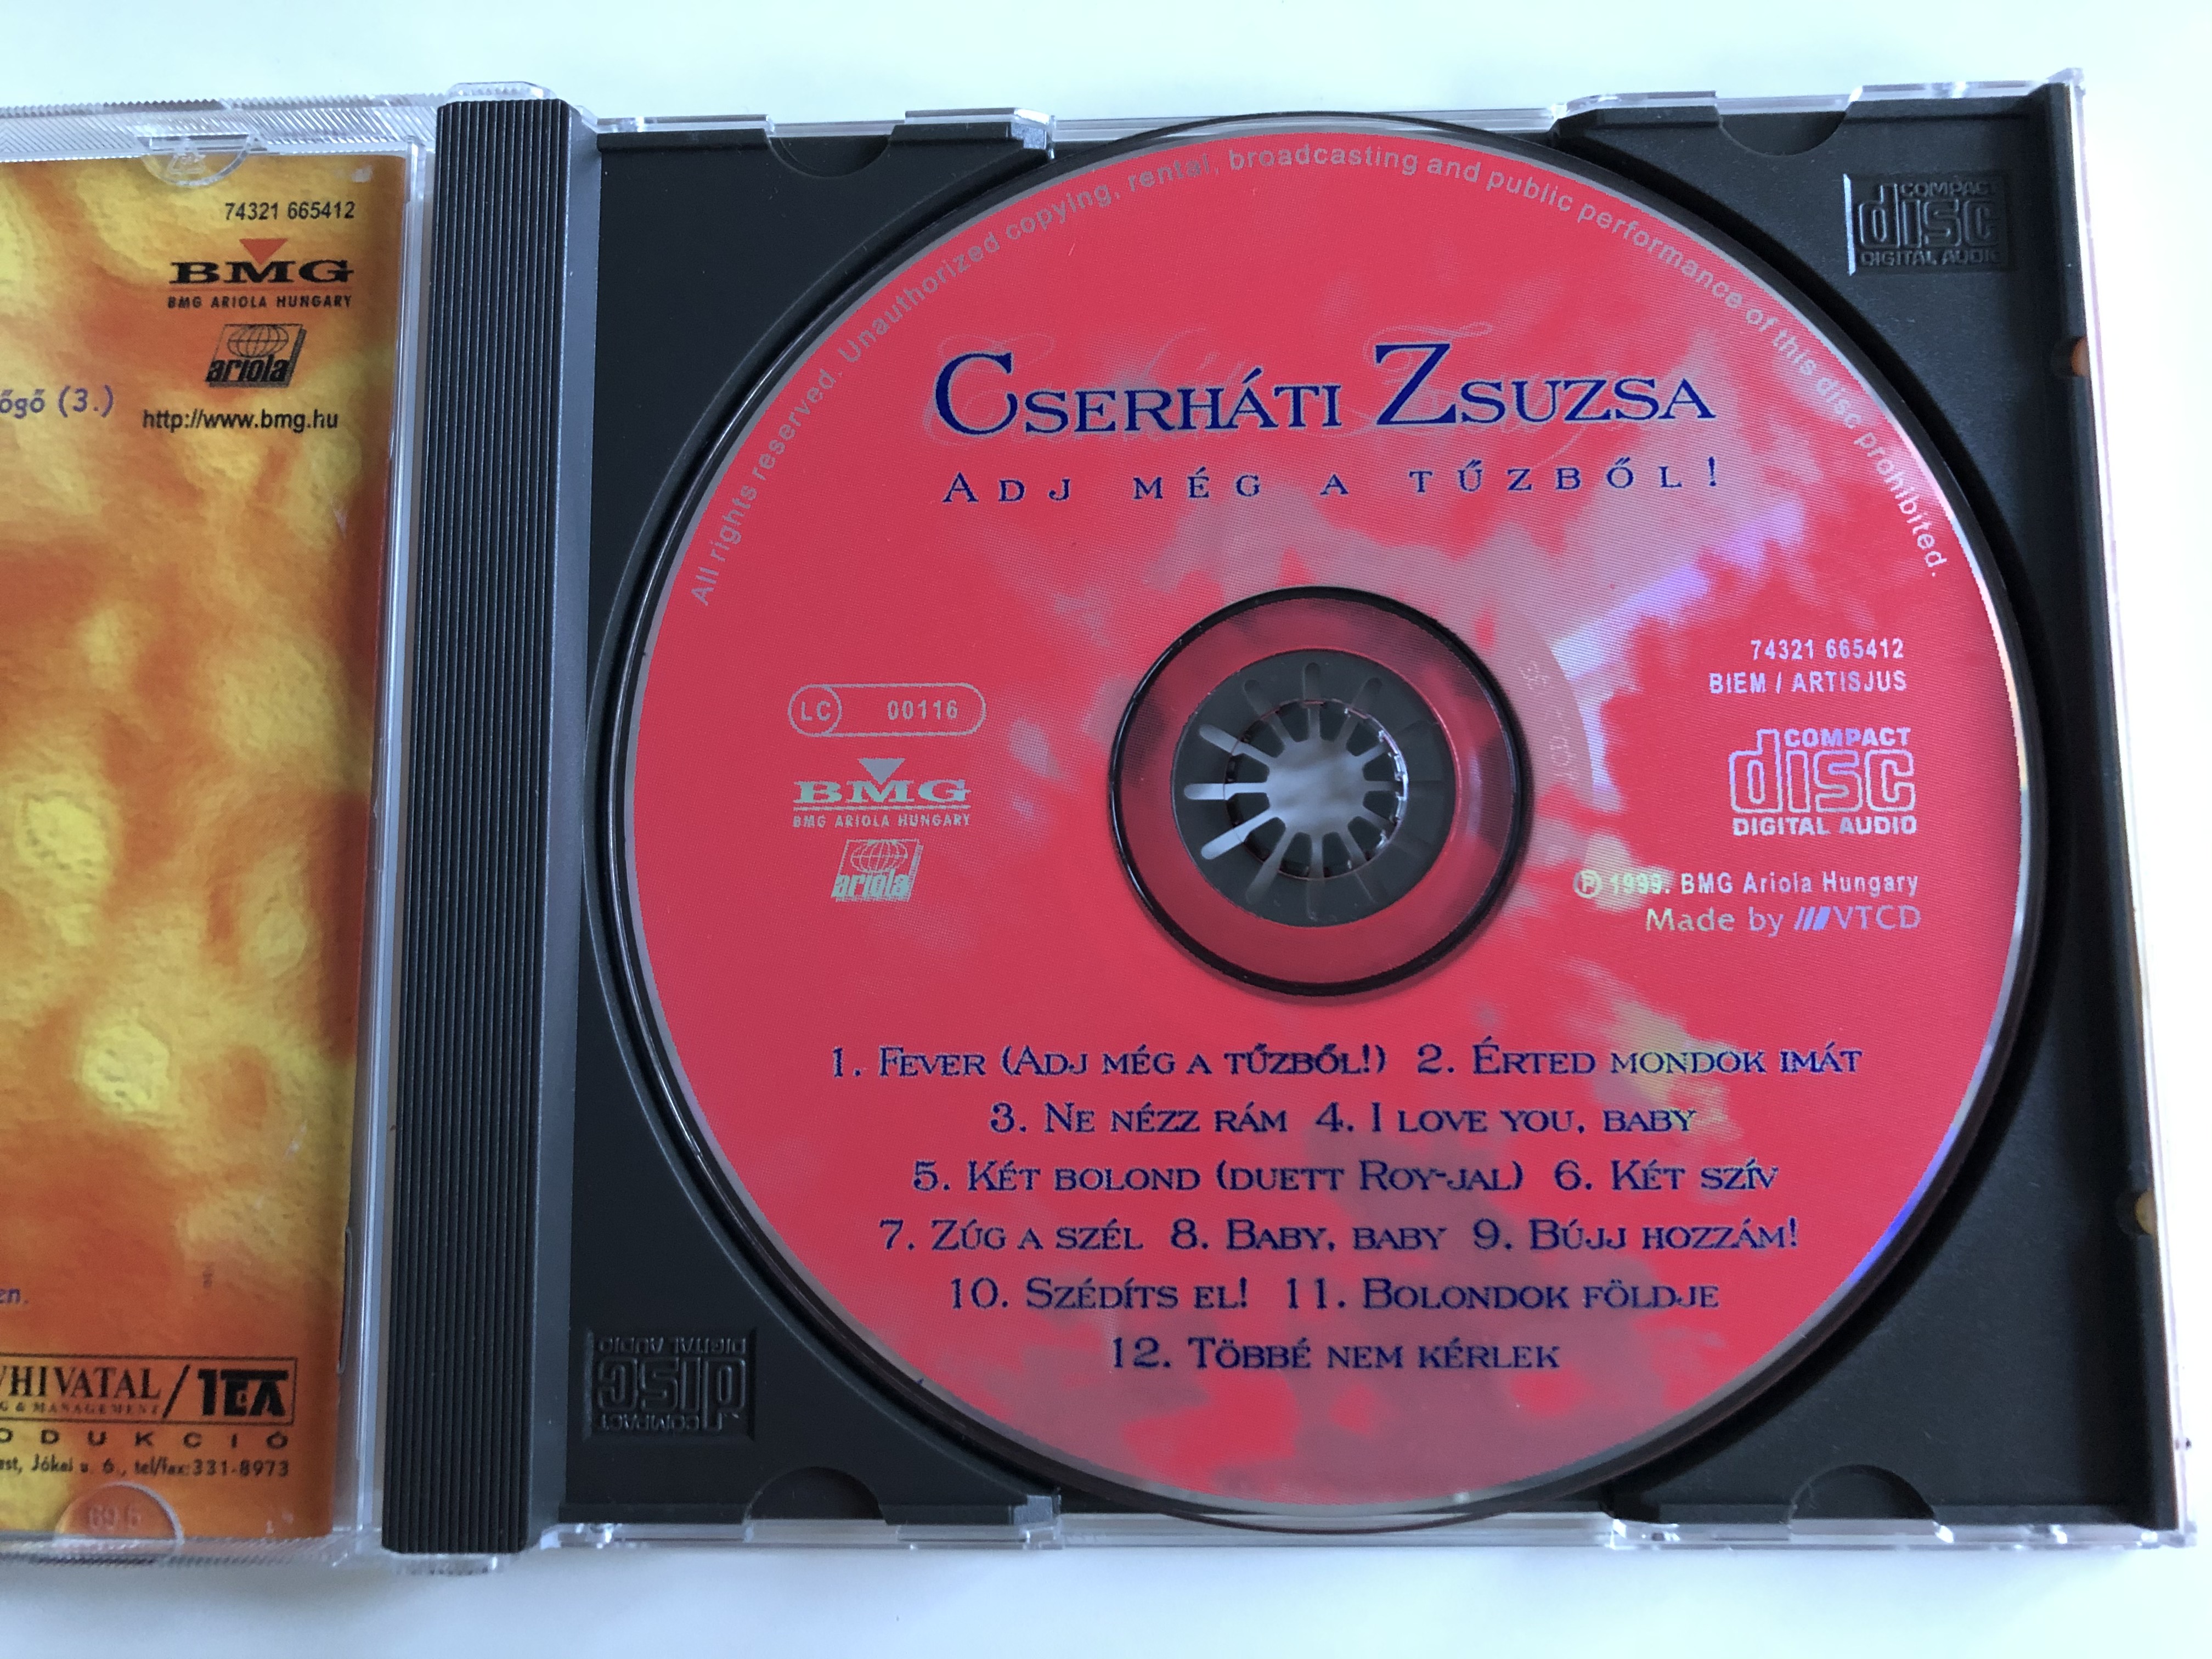 cserh-ti-zsuzsa-adj-m-g-a-t-zb-l-bmg-hungary-audio-cd-1999-74321-665412-7-.jpg